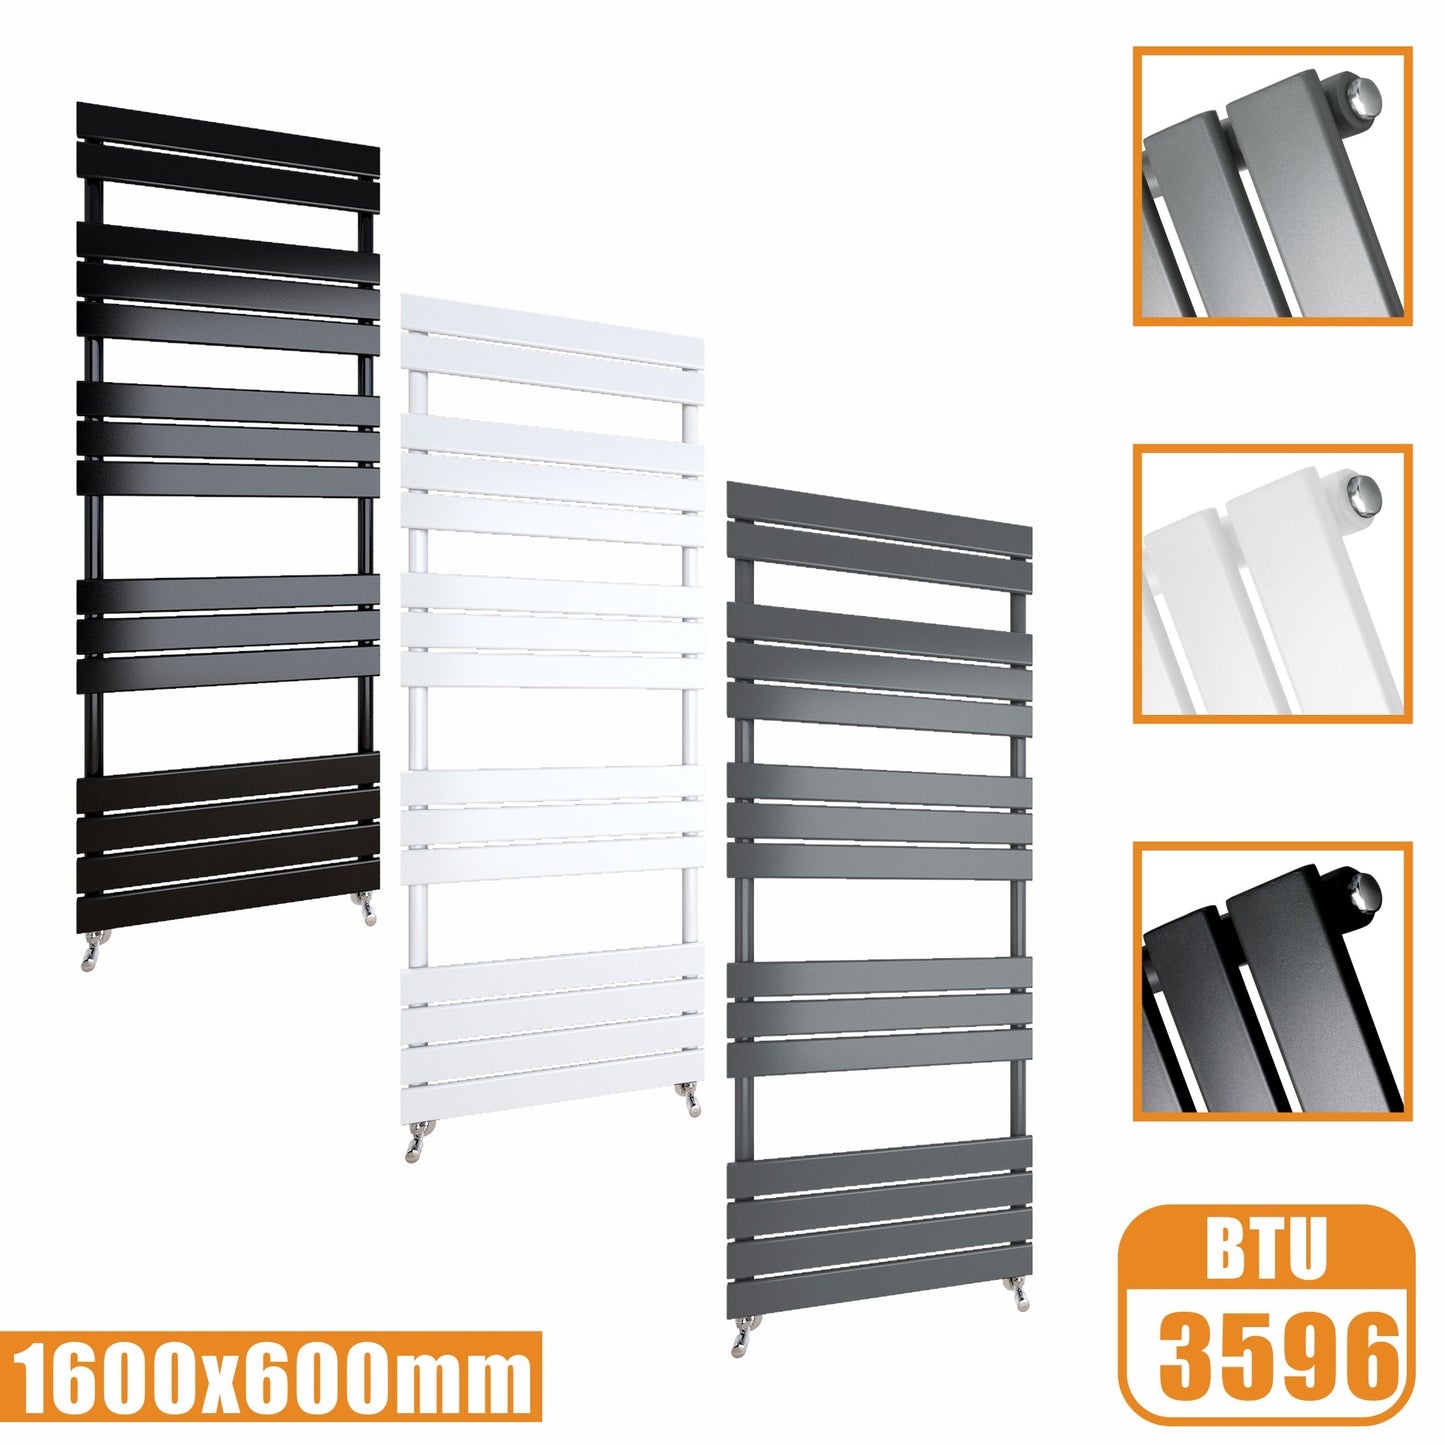 Flat Panel Heated Towel Rail ladder Radiator Anthracite White Black 1600x600MM AICA